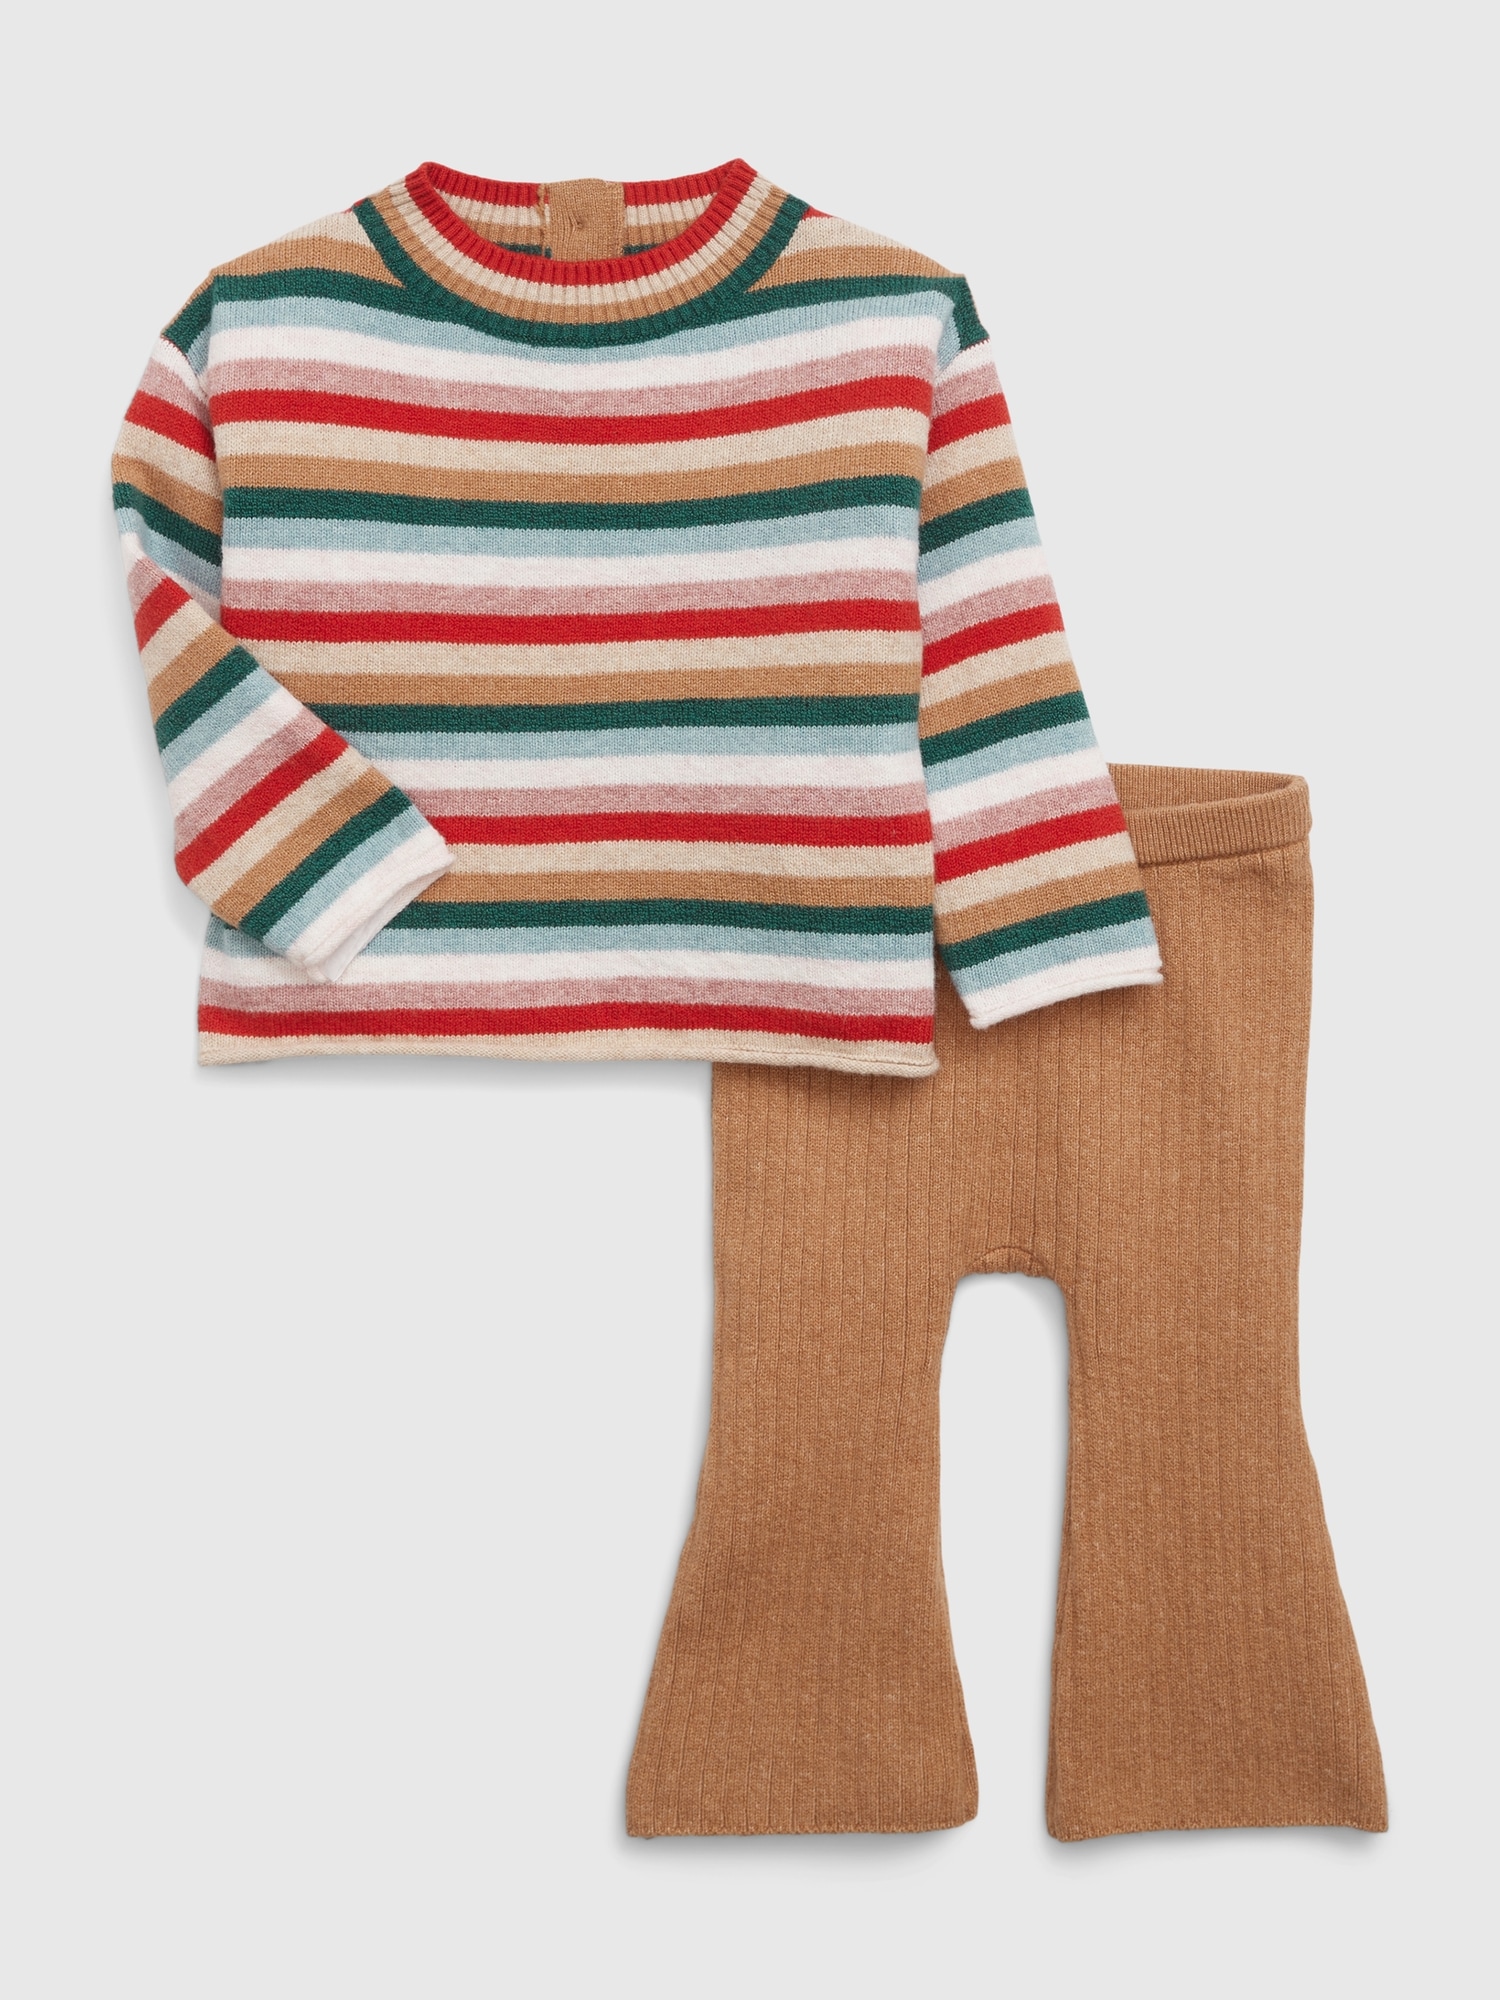 Gap Baby CashSoft Sweater Outfit Set